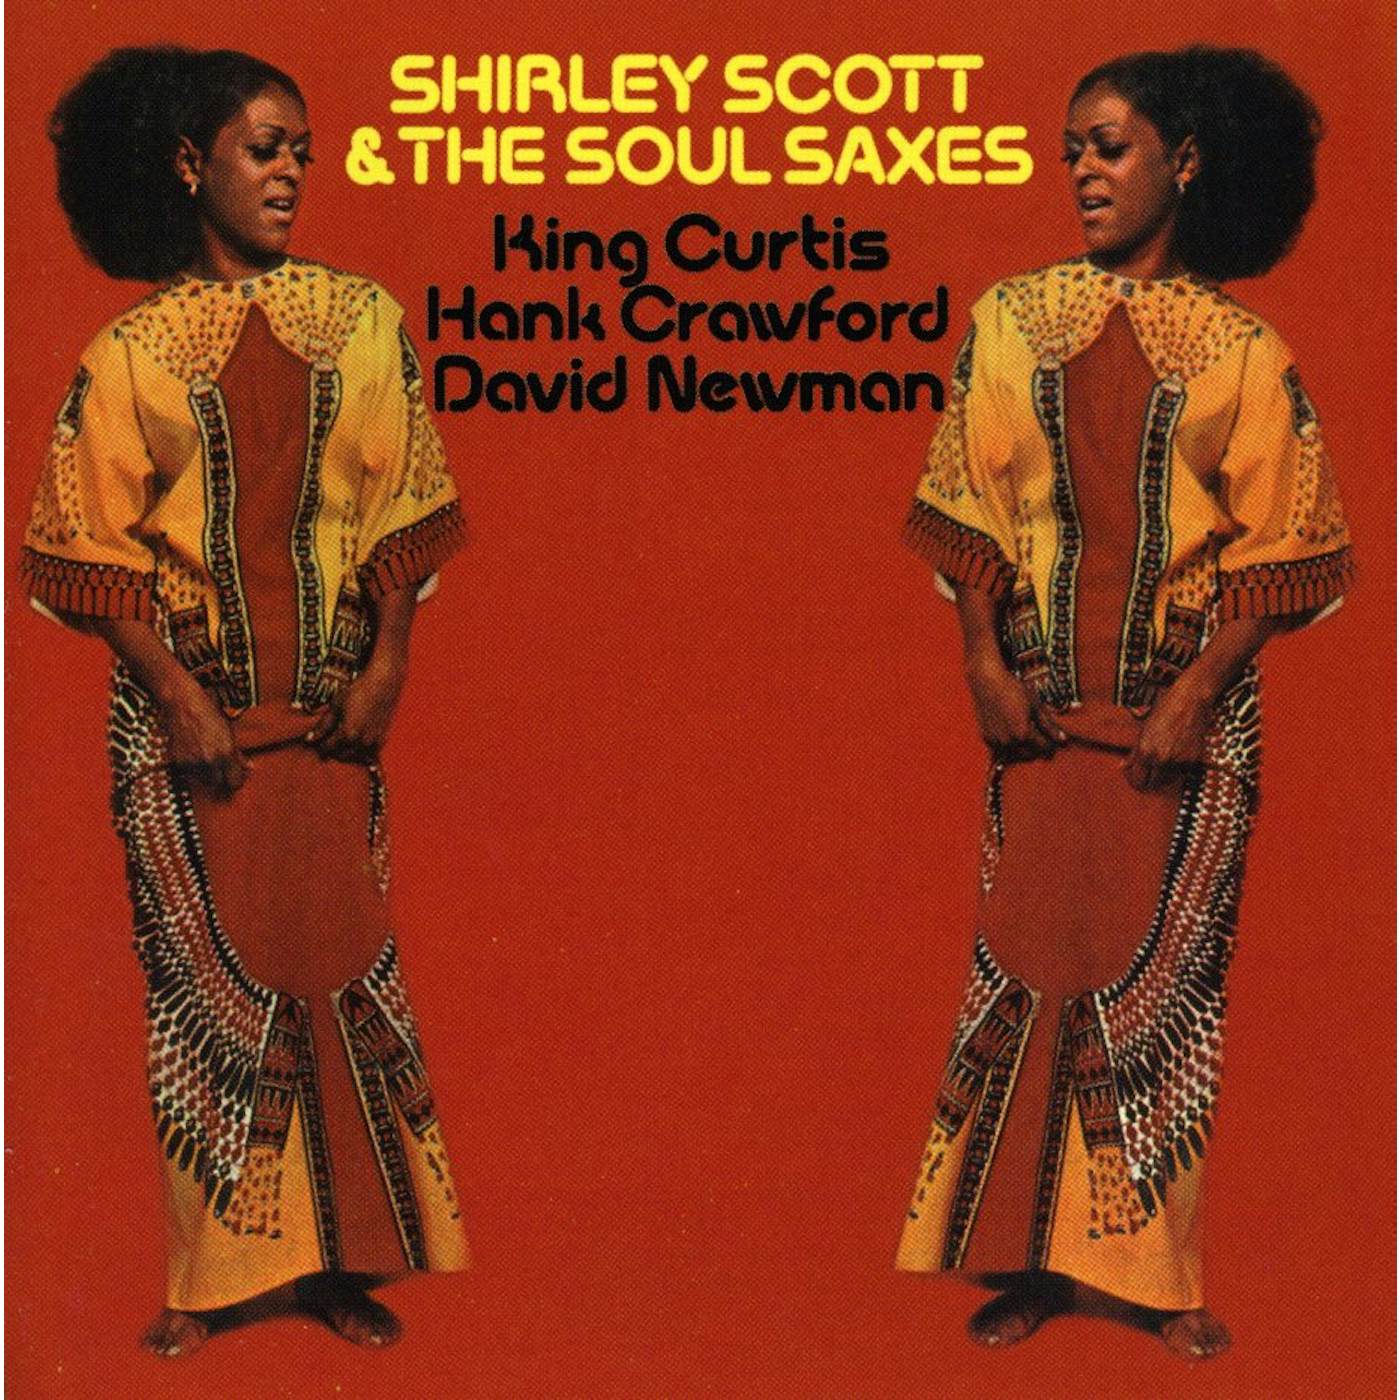 SHIRLEY SCOTT & SOUL SAXES CD